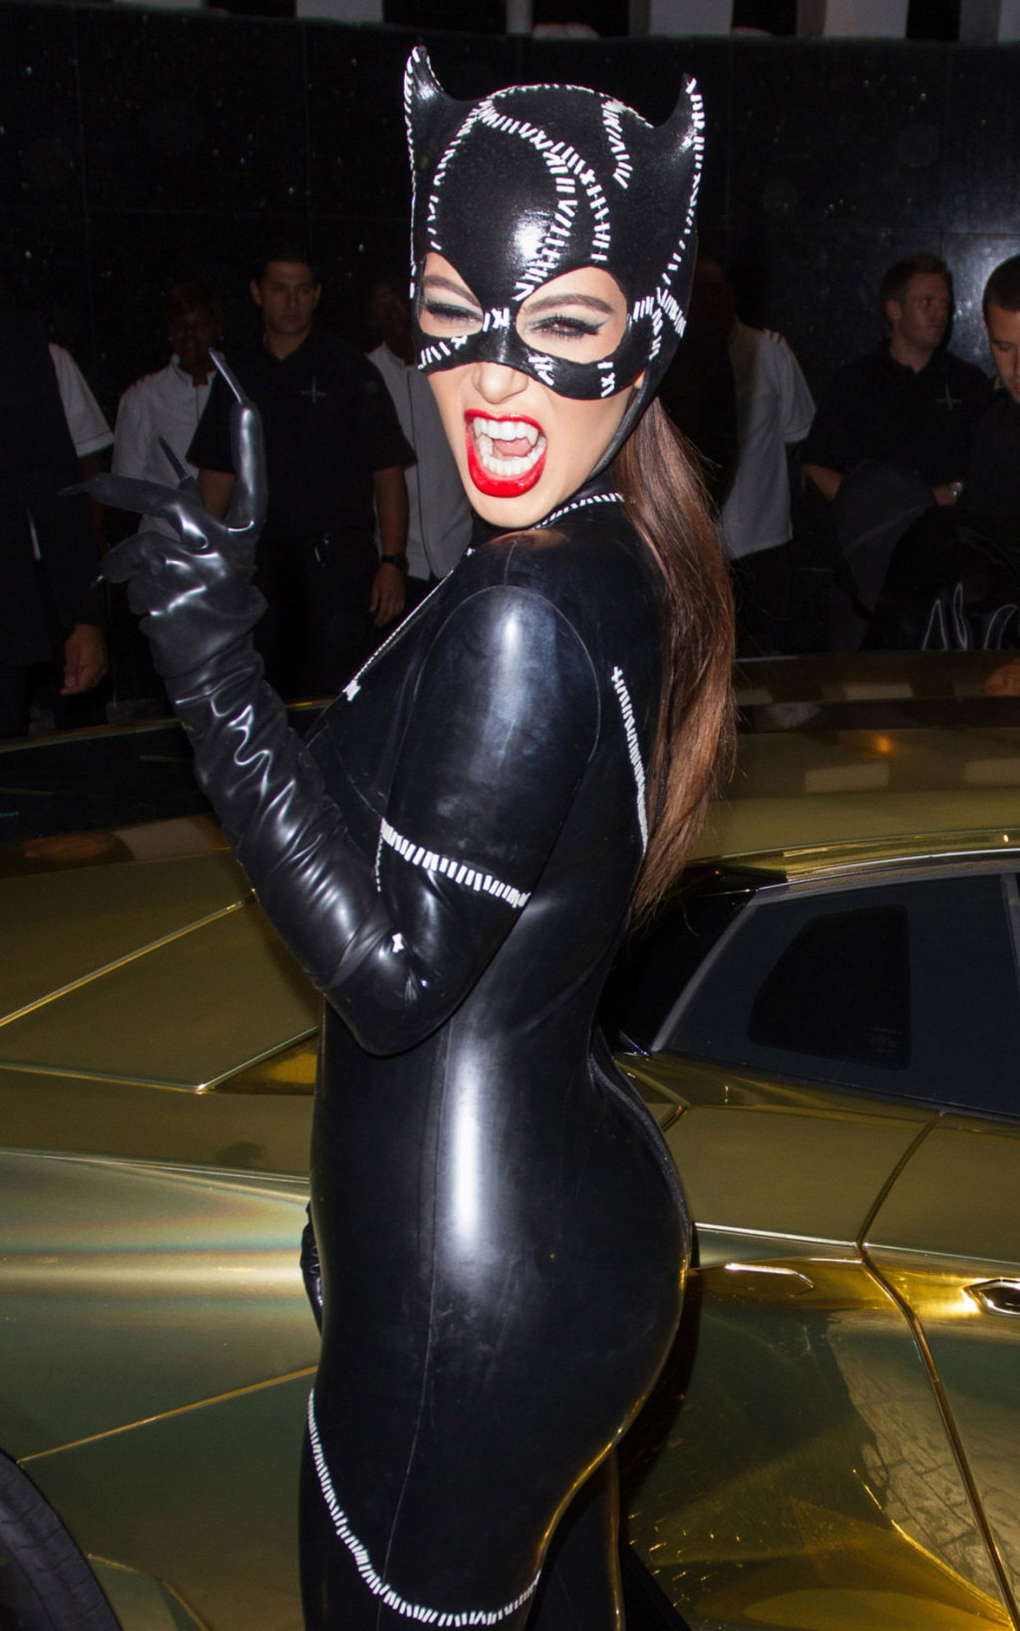 Kim Kardashian - Cat Woman Costume at 2012 Halloween Birthday Bash At LIV Nightclub in Florida